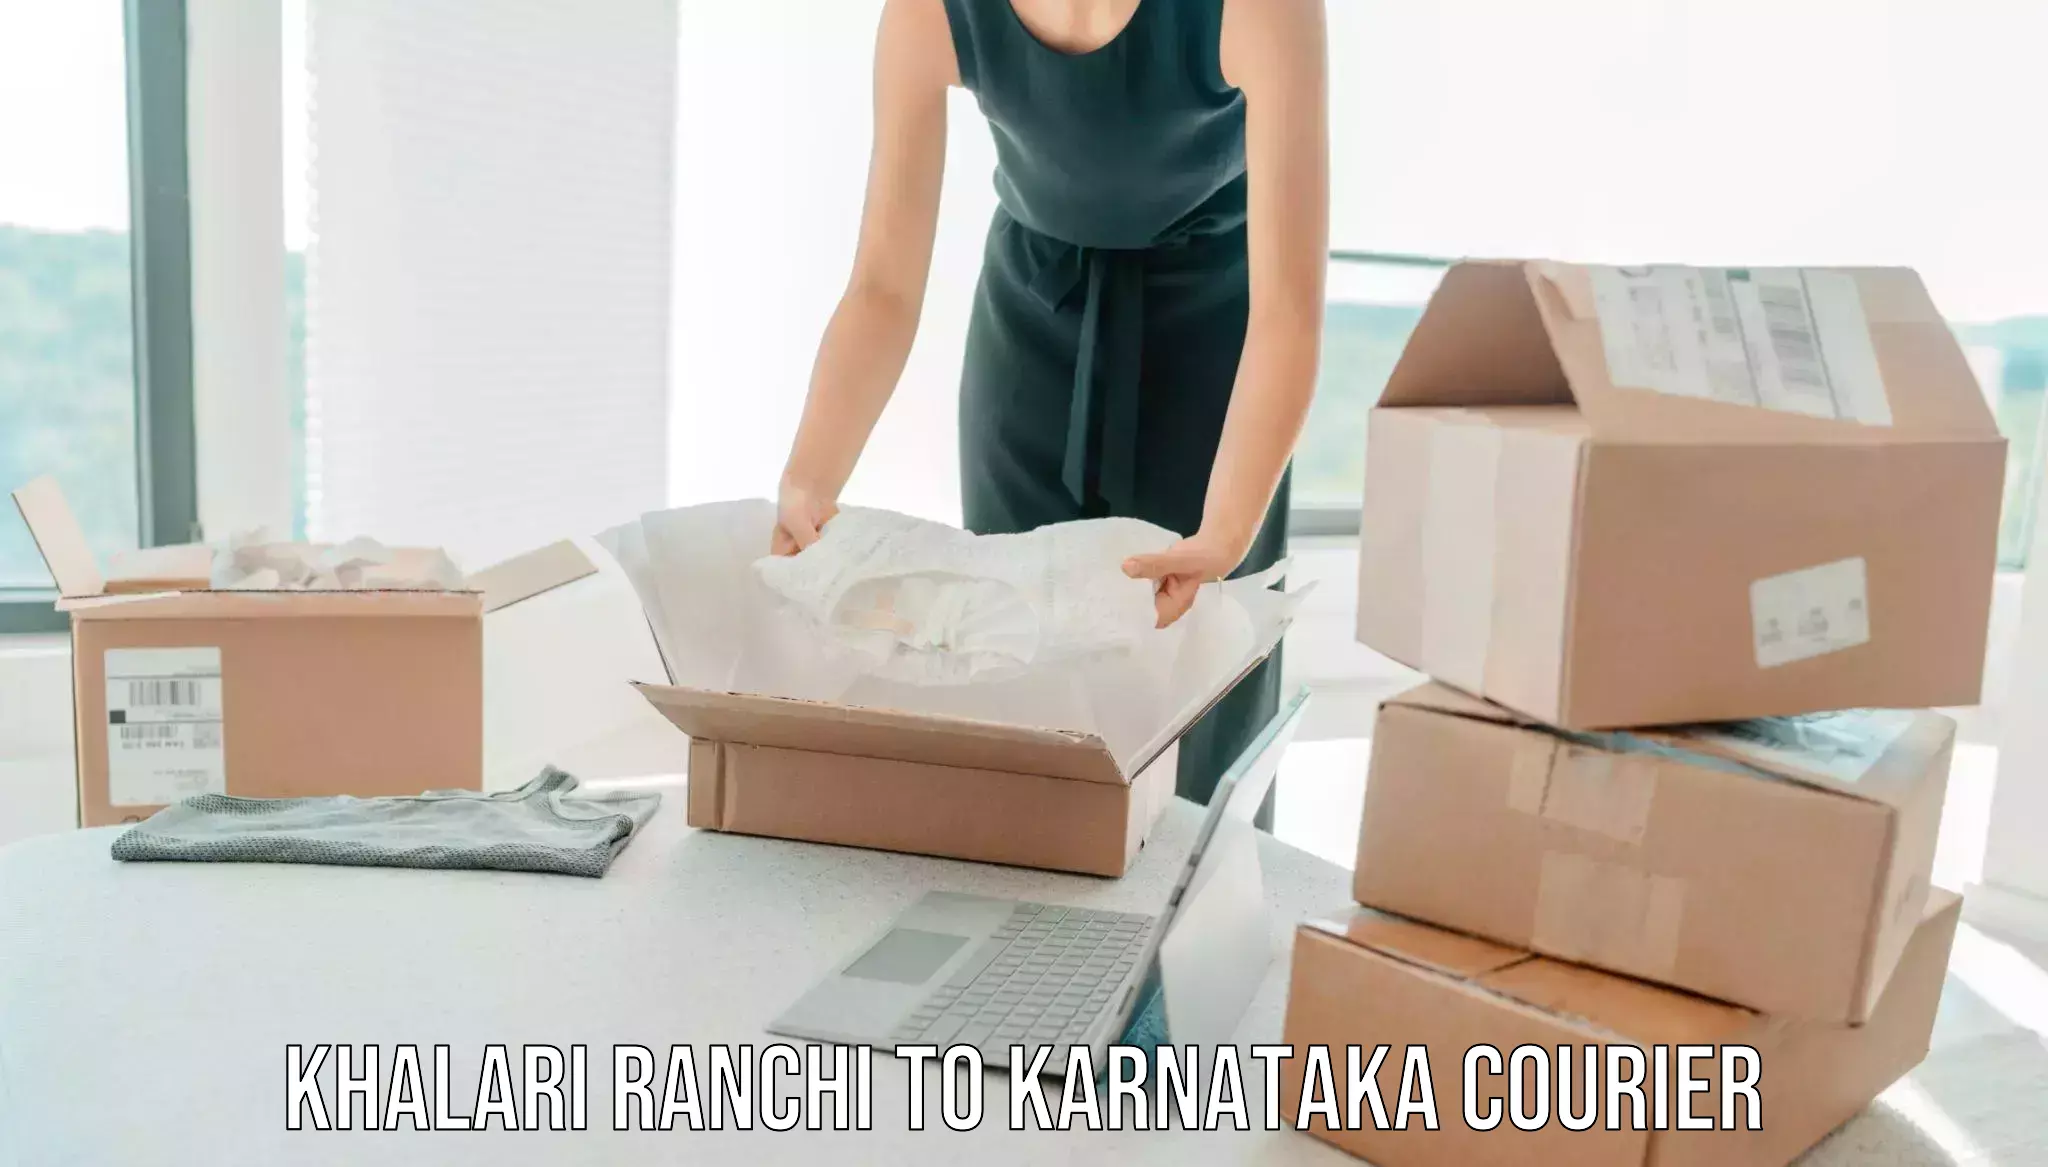 Household goods movers and packers Khalari Ranchi to Karnataka